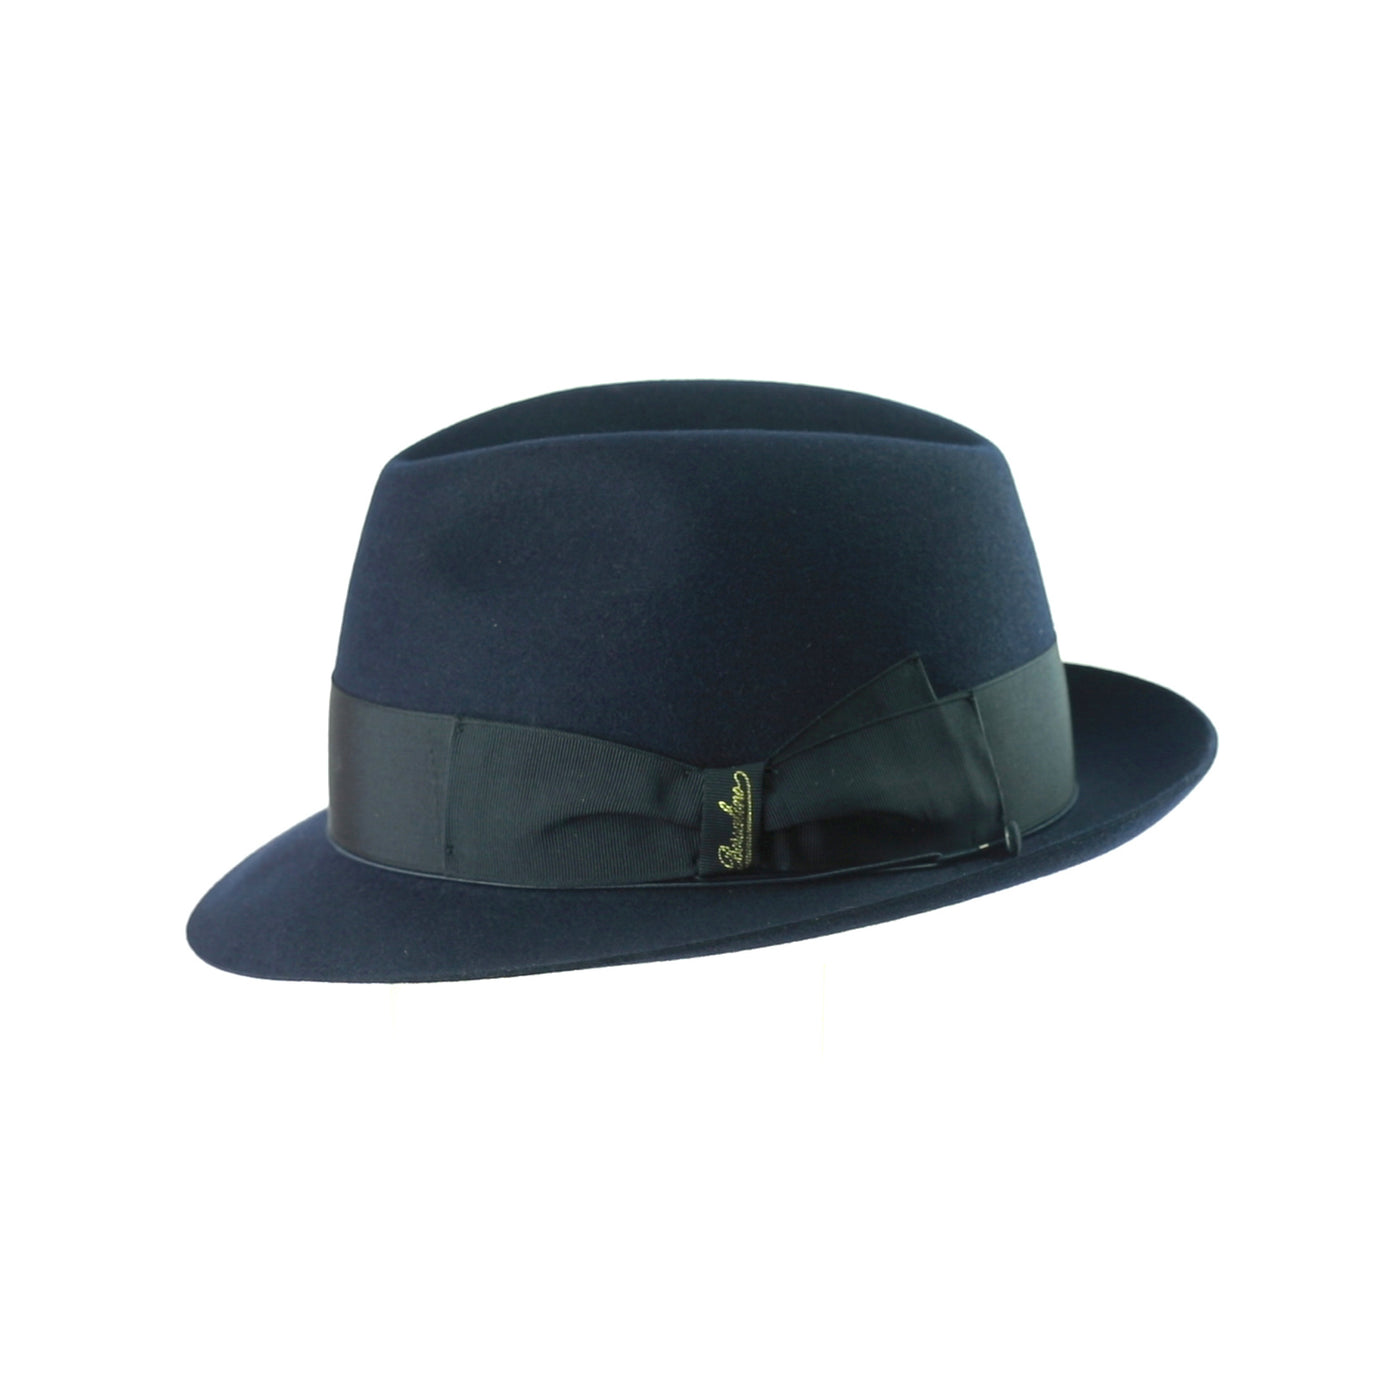 Claudio 178 - Royal Blue, product_type] - Borsalino for Atica fedora hat